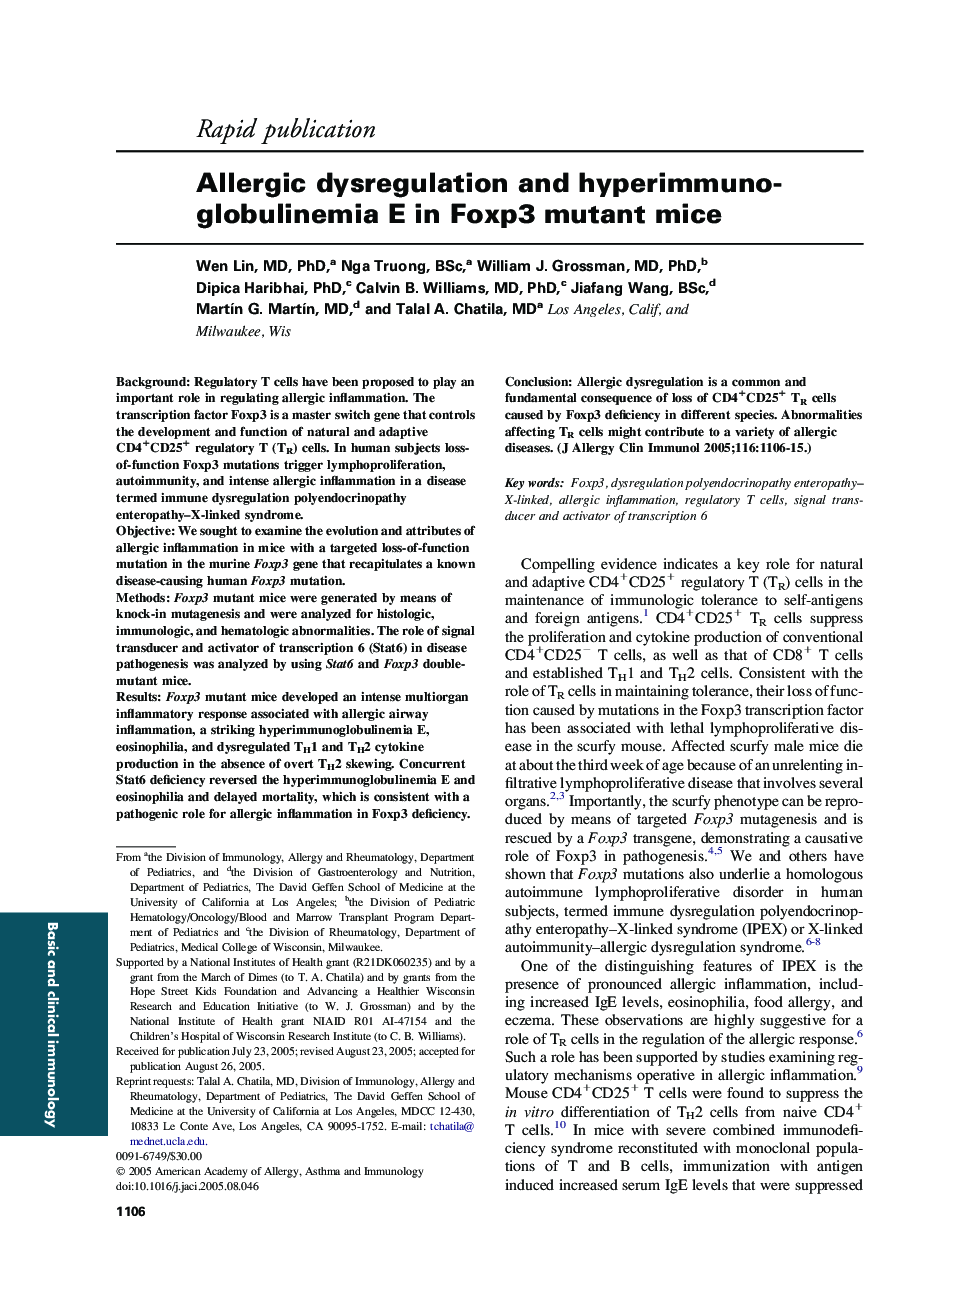 Allergic dysregulation and hyperimmunoglobulinemia E in Foxp3 mutant mice